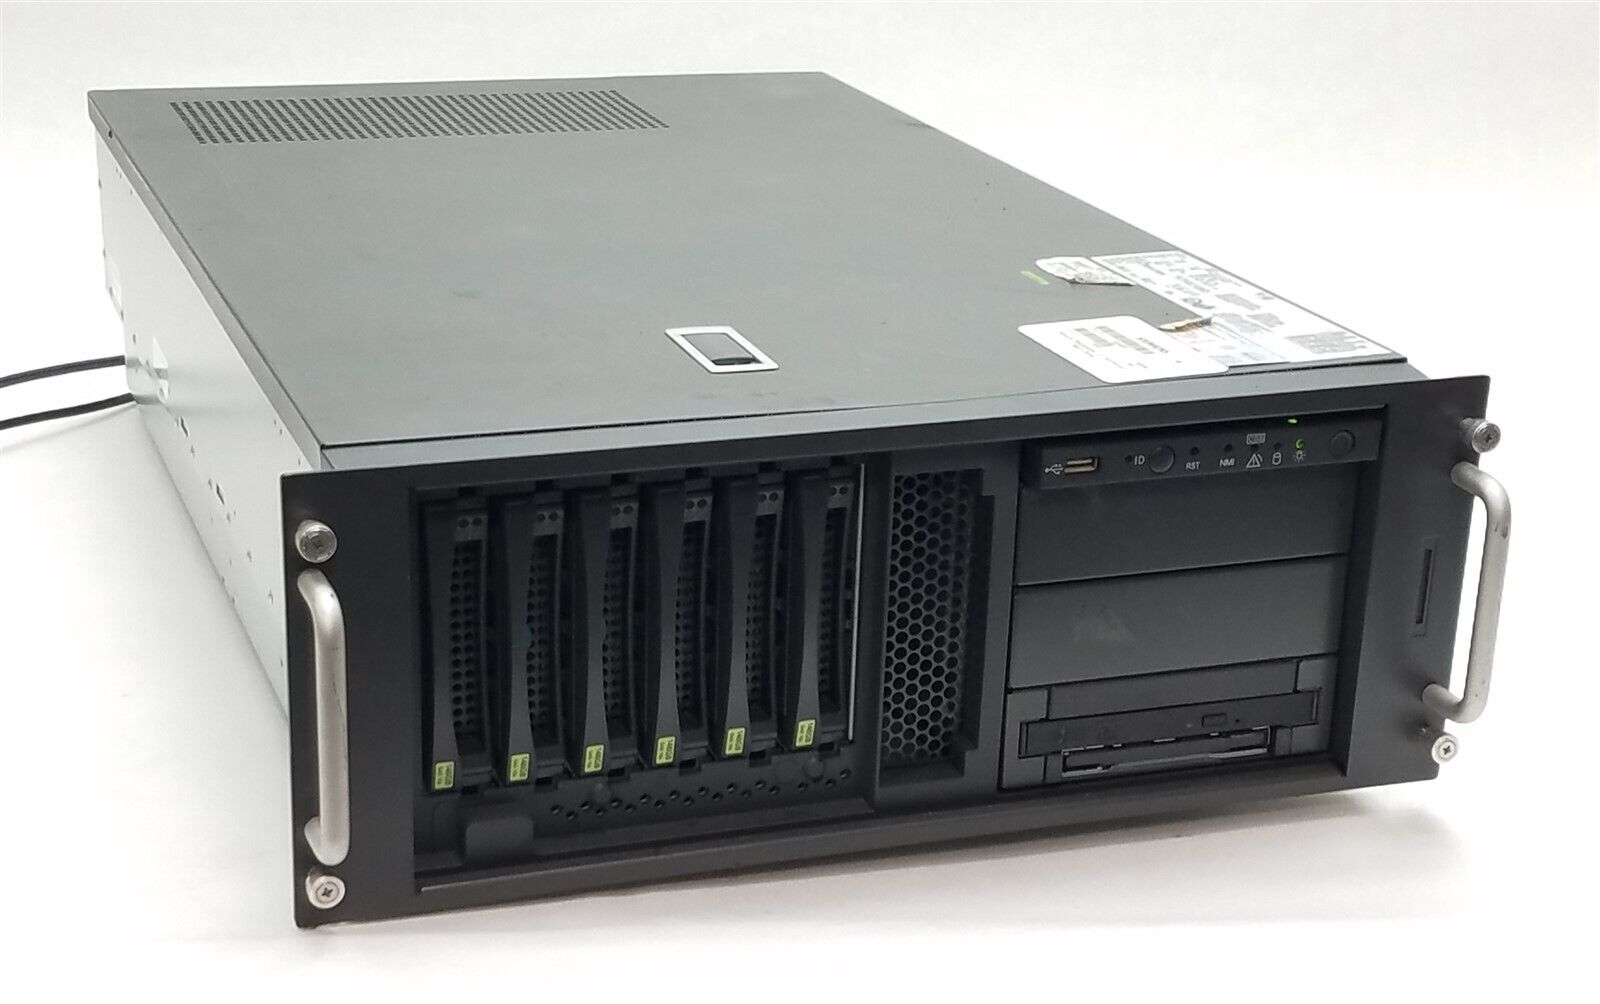 Fujitsu Siemens Primergy TX300 S4 Server Xeon L5430 2.66GHz CPU 5*146GB HDD 2GB